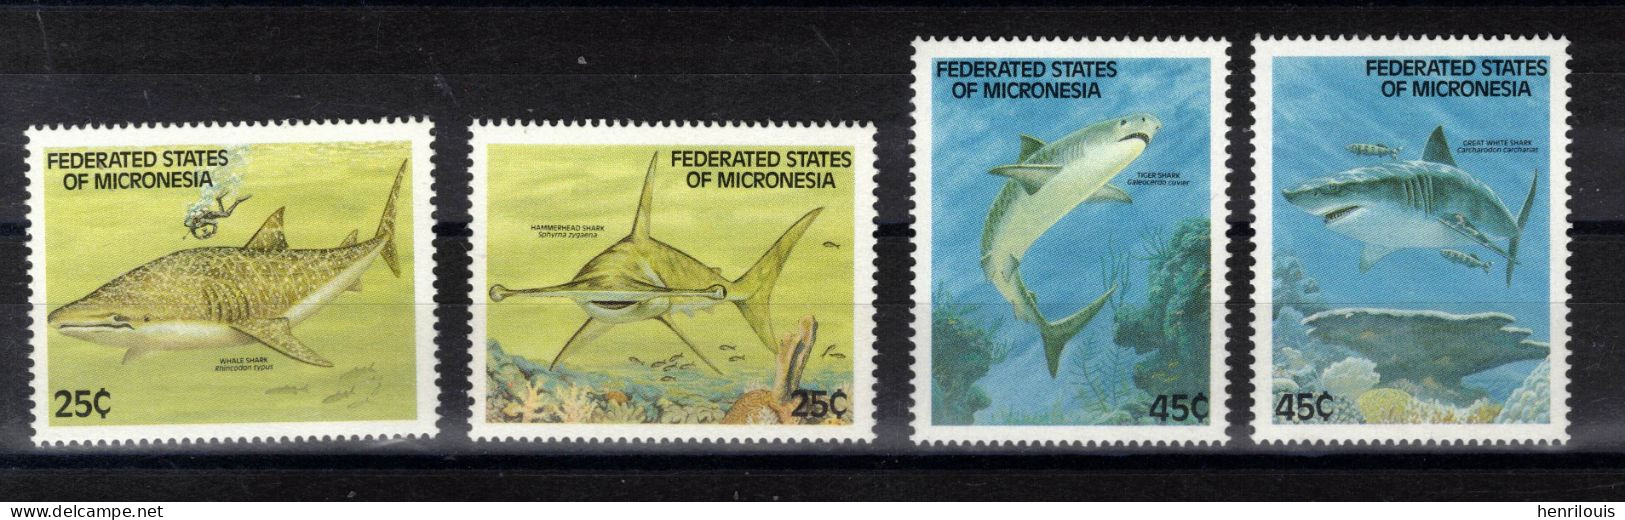 MICRONESIE    Timbres Neufs ** De 1989  ( Ref 4953 A )Faune Marine - Requins - Micronésie